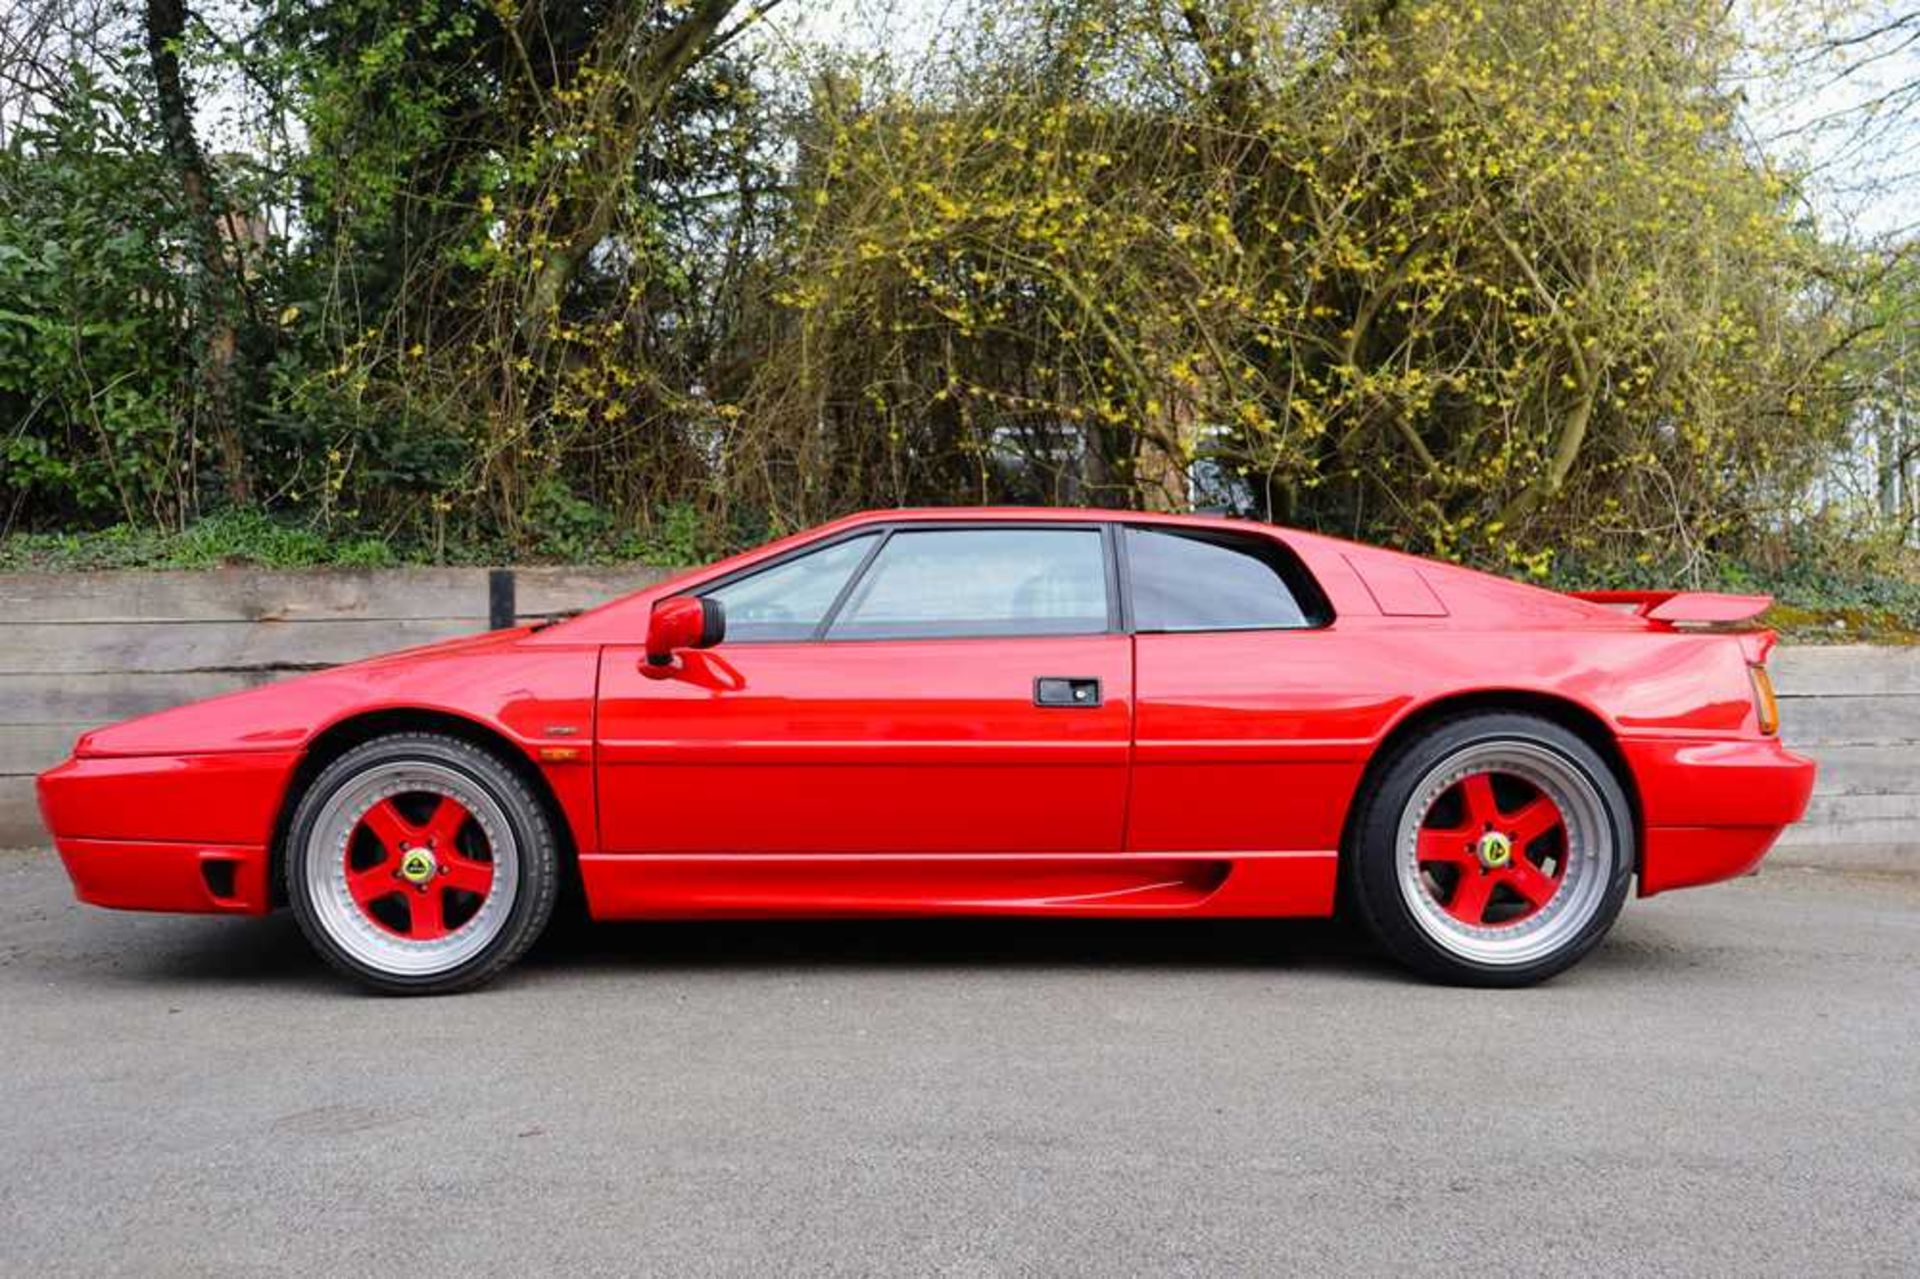 1989 Lotus Esprit Turbo Just 37,000 recorded miles - Image 12 of 72